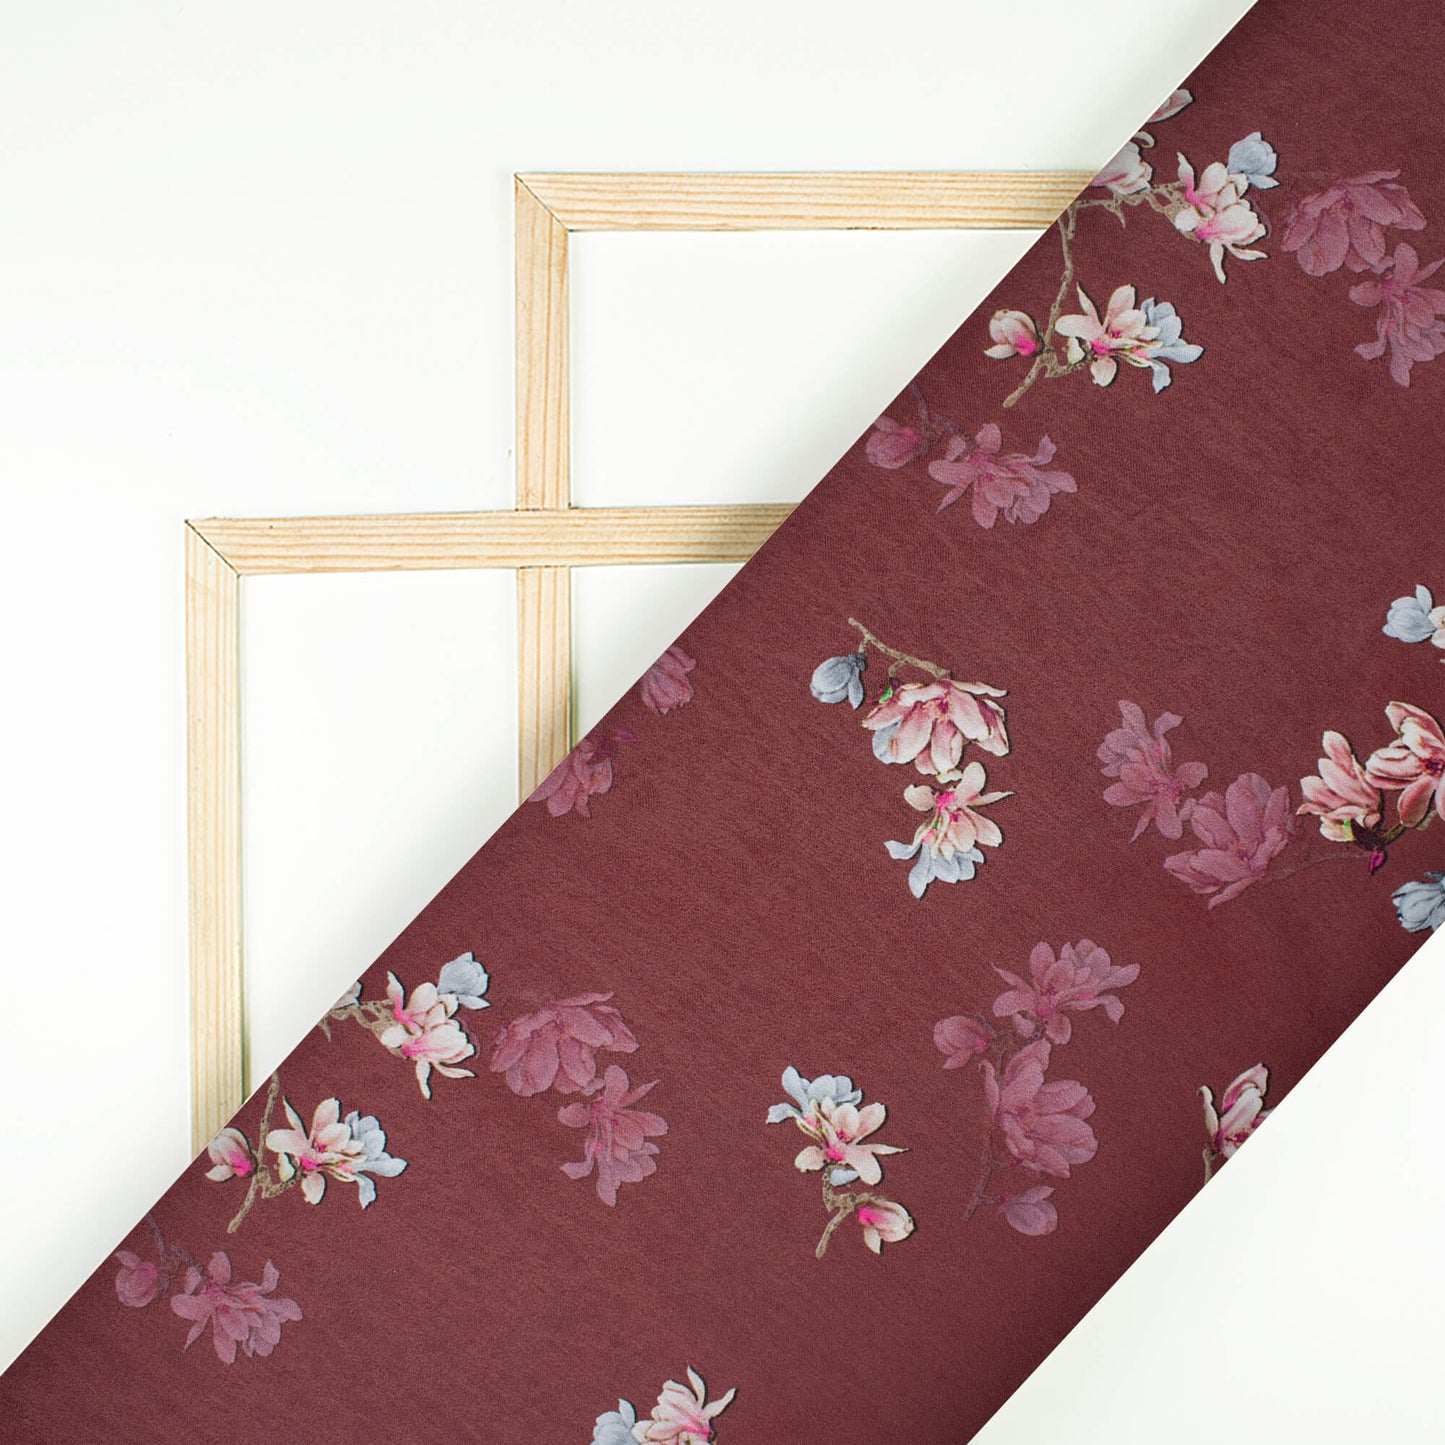 Mahogany Brown And Pink Floral Pattern Digital Print Lush Satin Fabric